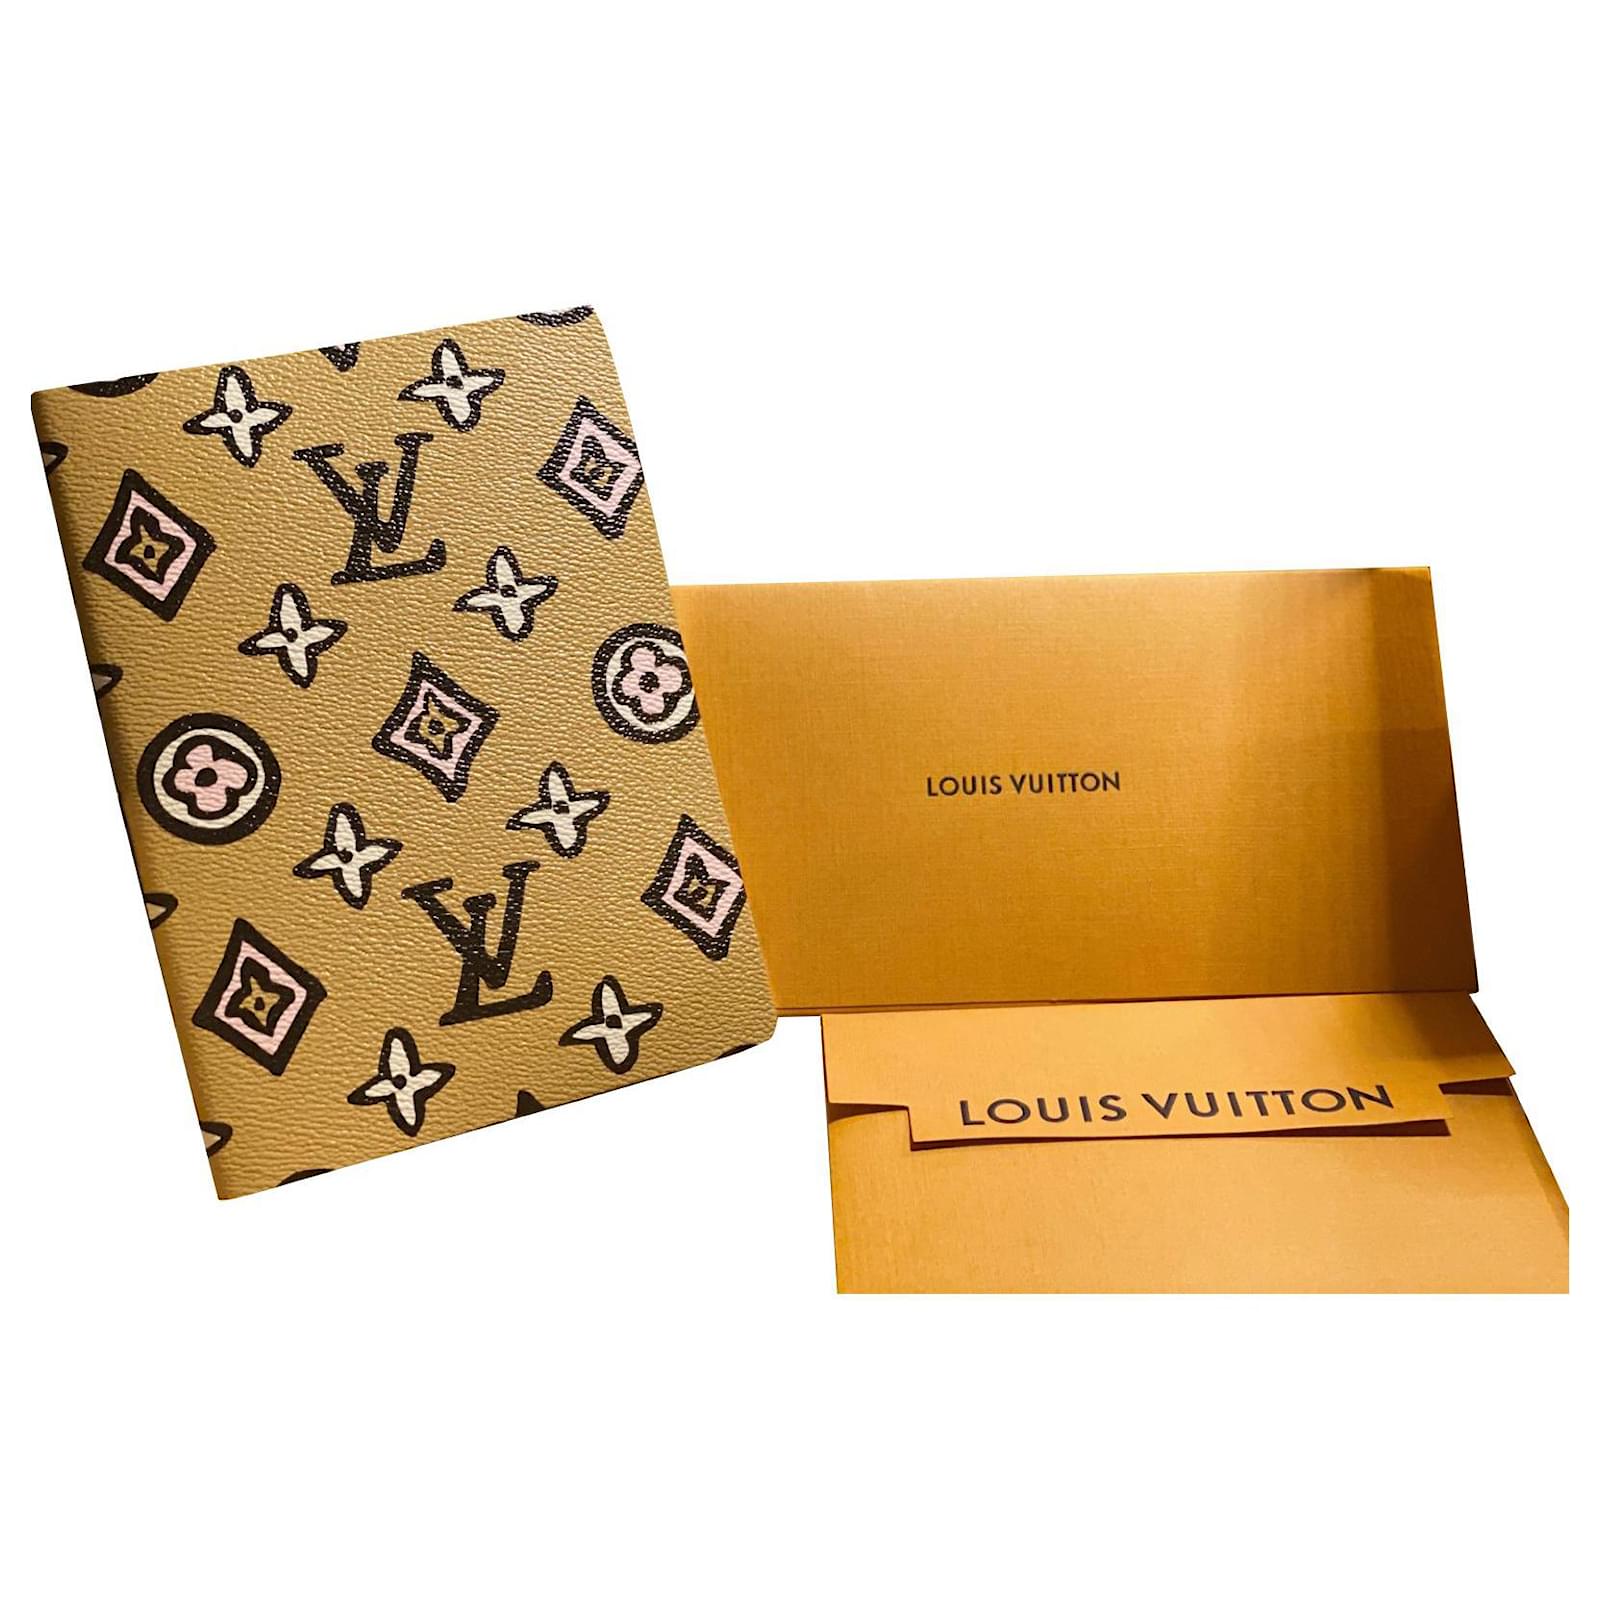 Louis Vuitton wild at heart update, Louis Vuitton Animal print